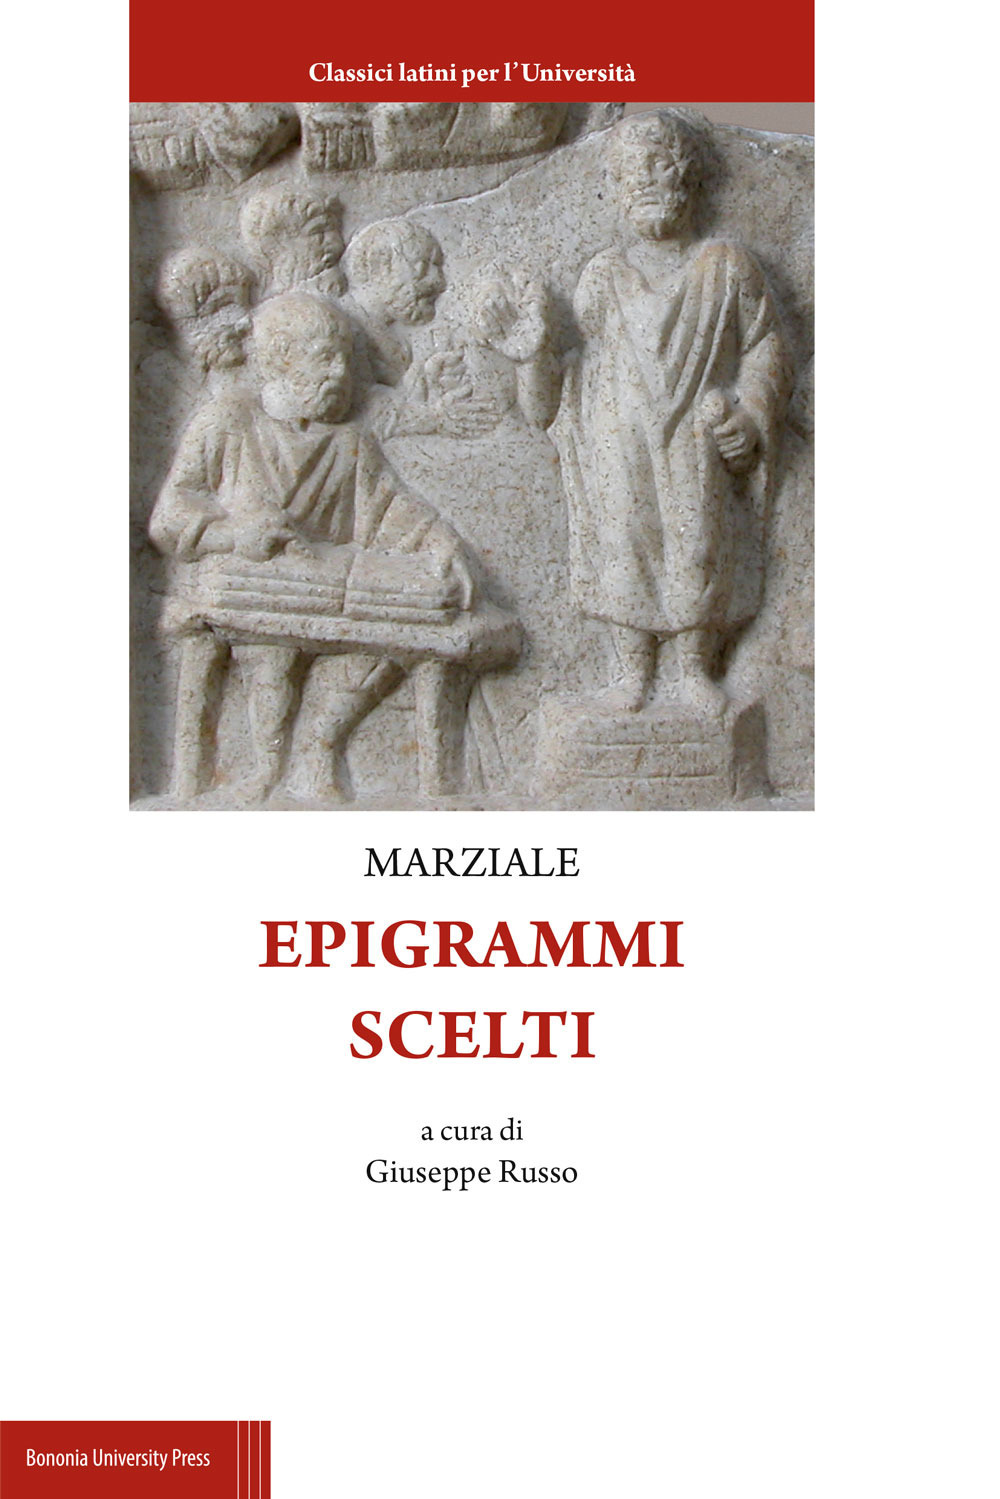 Image of Epigrammi scelti